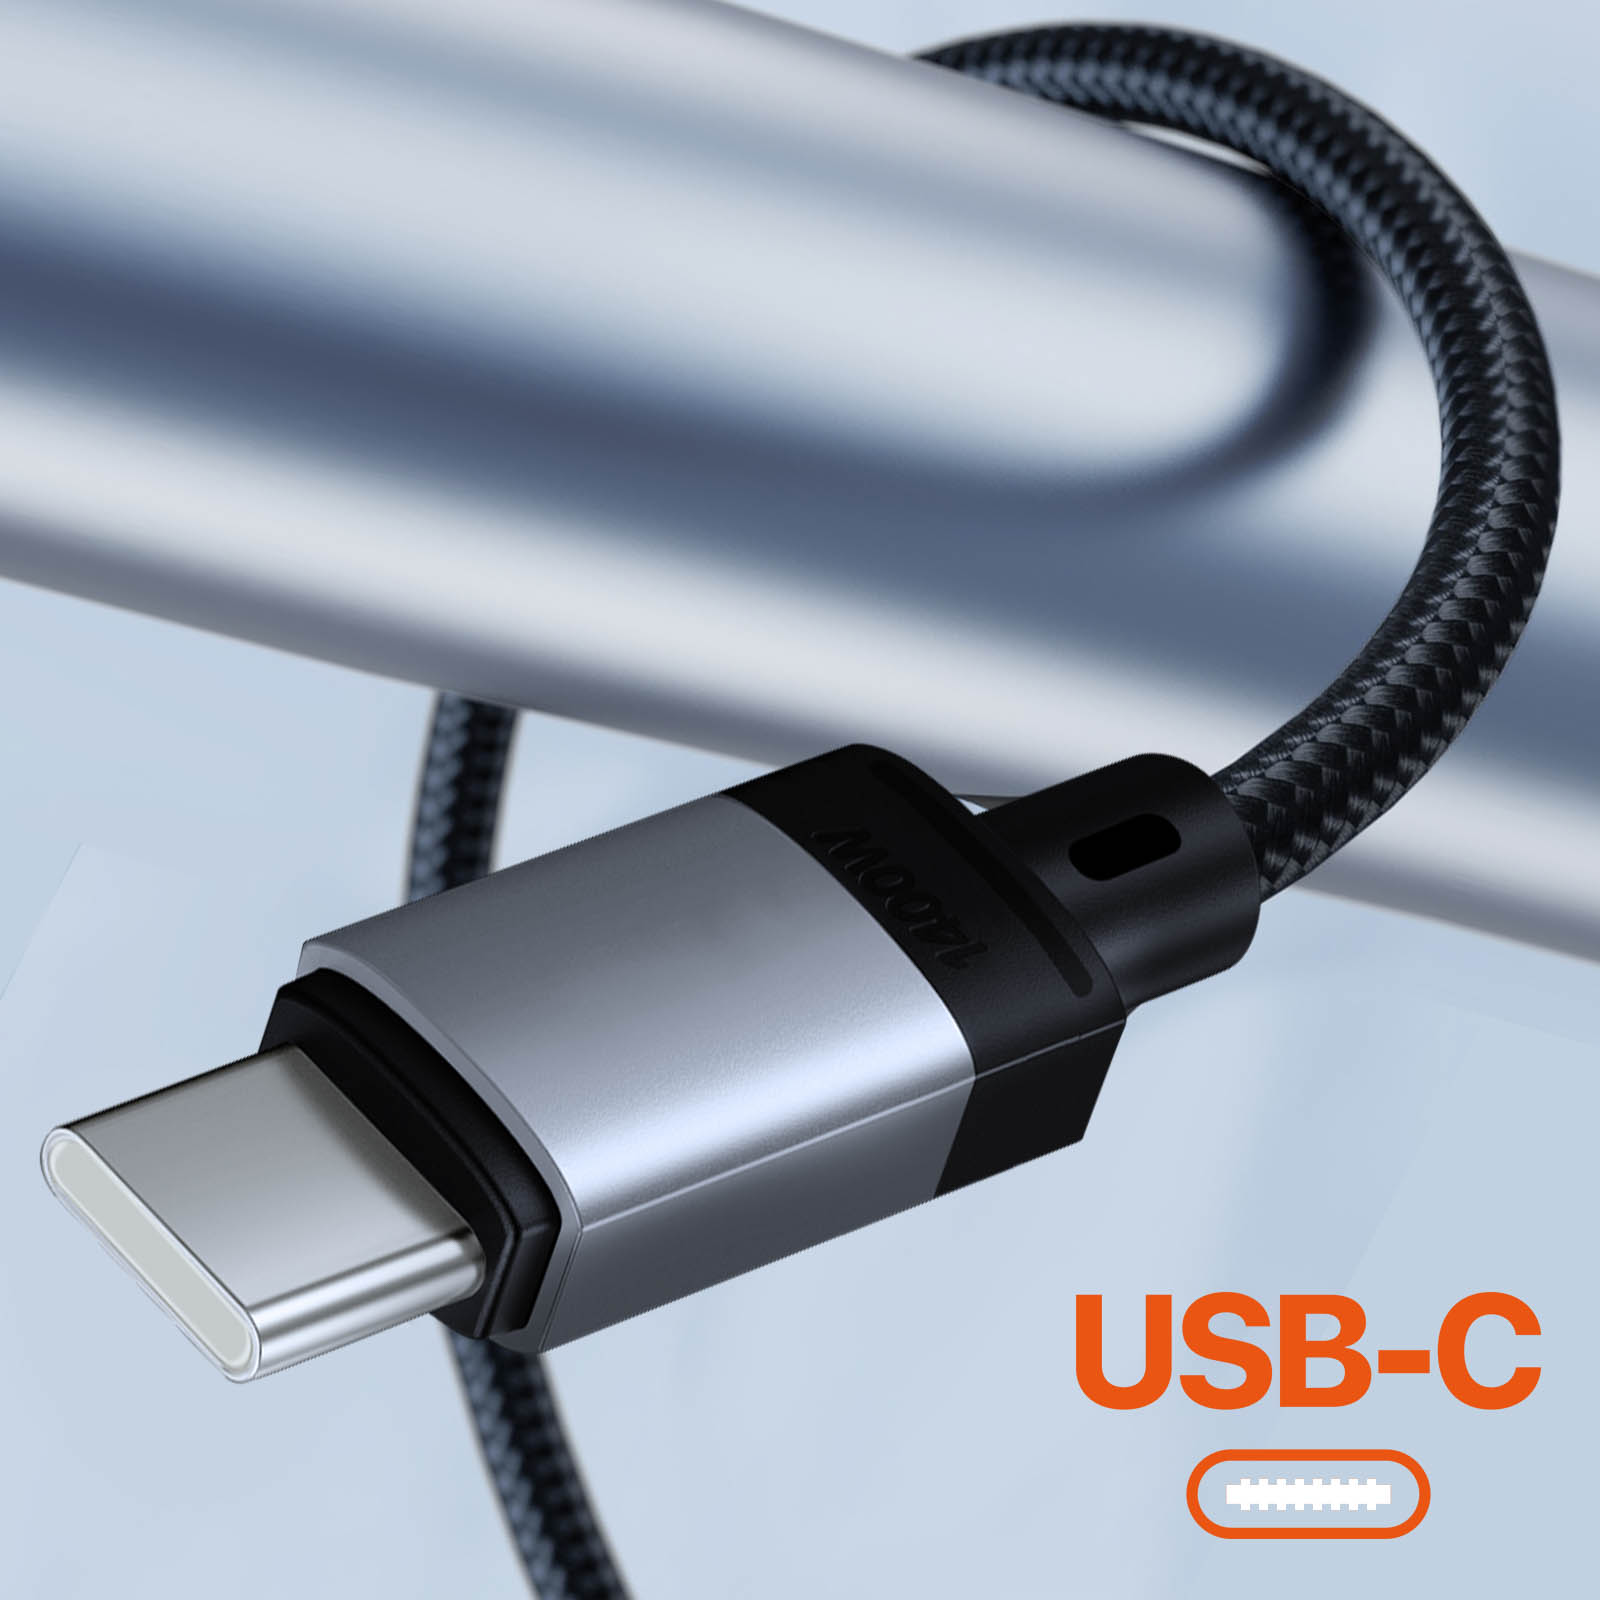 Câble USB C vers MagSafe 3 MacBook, 140W, Nylon Résistant 2m